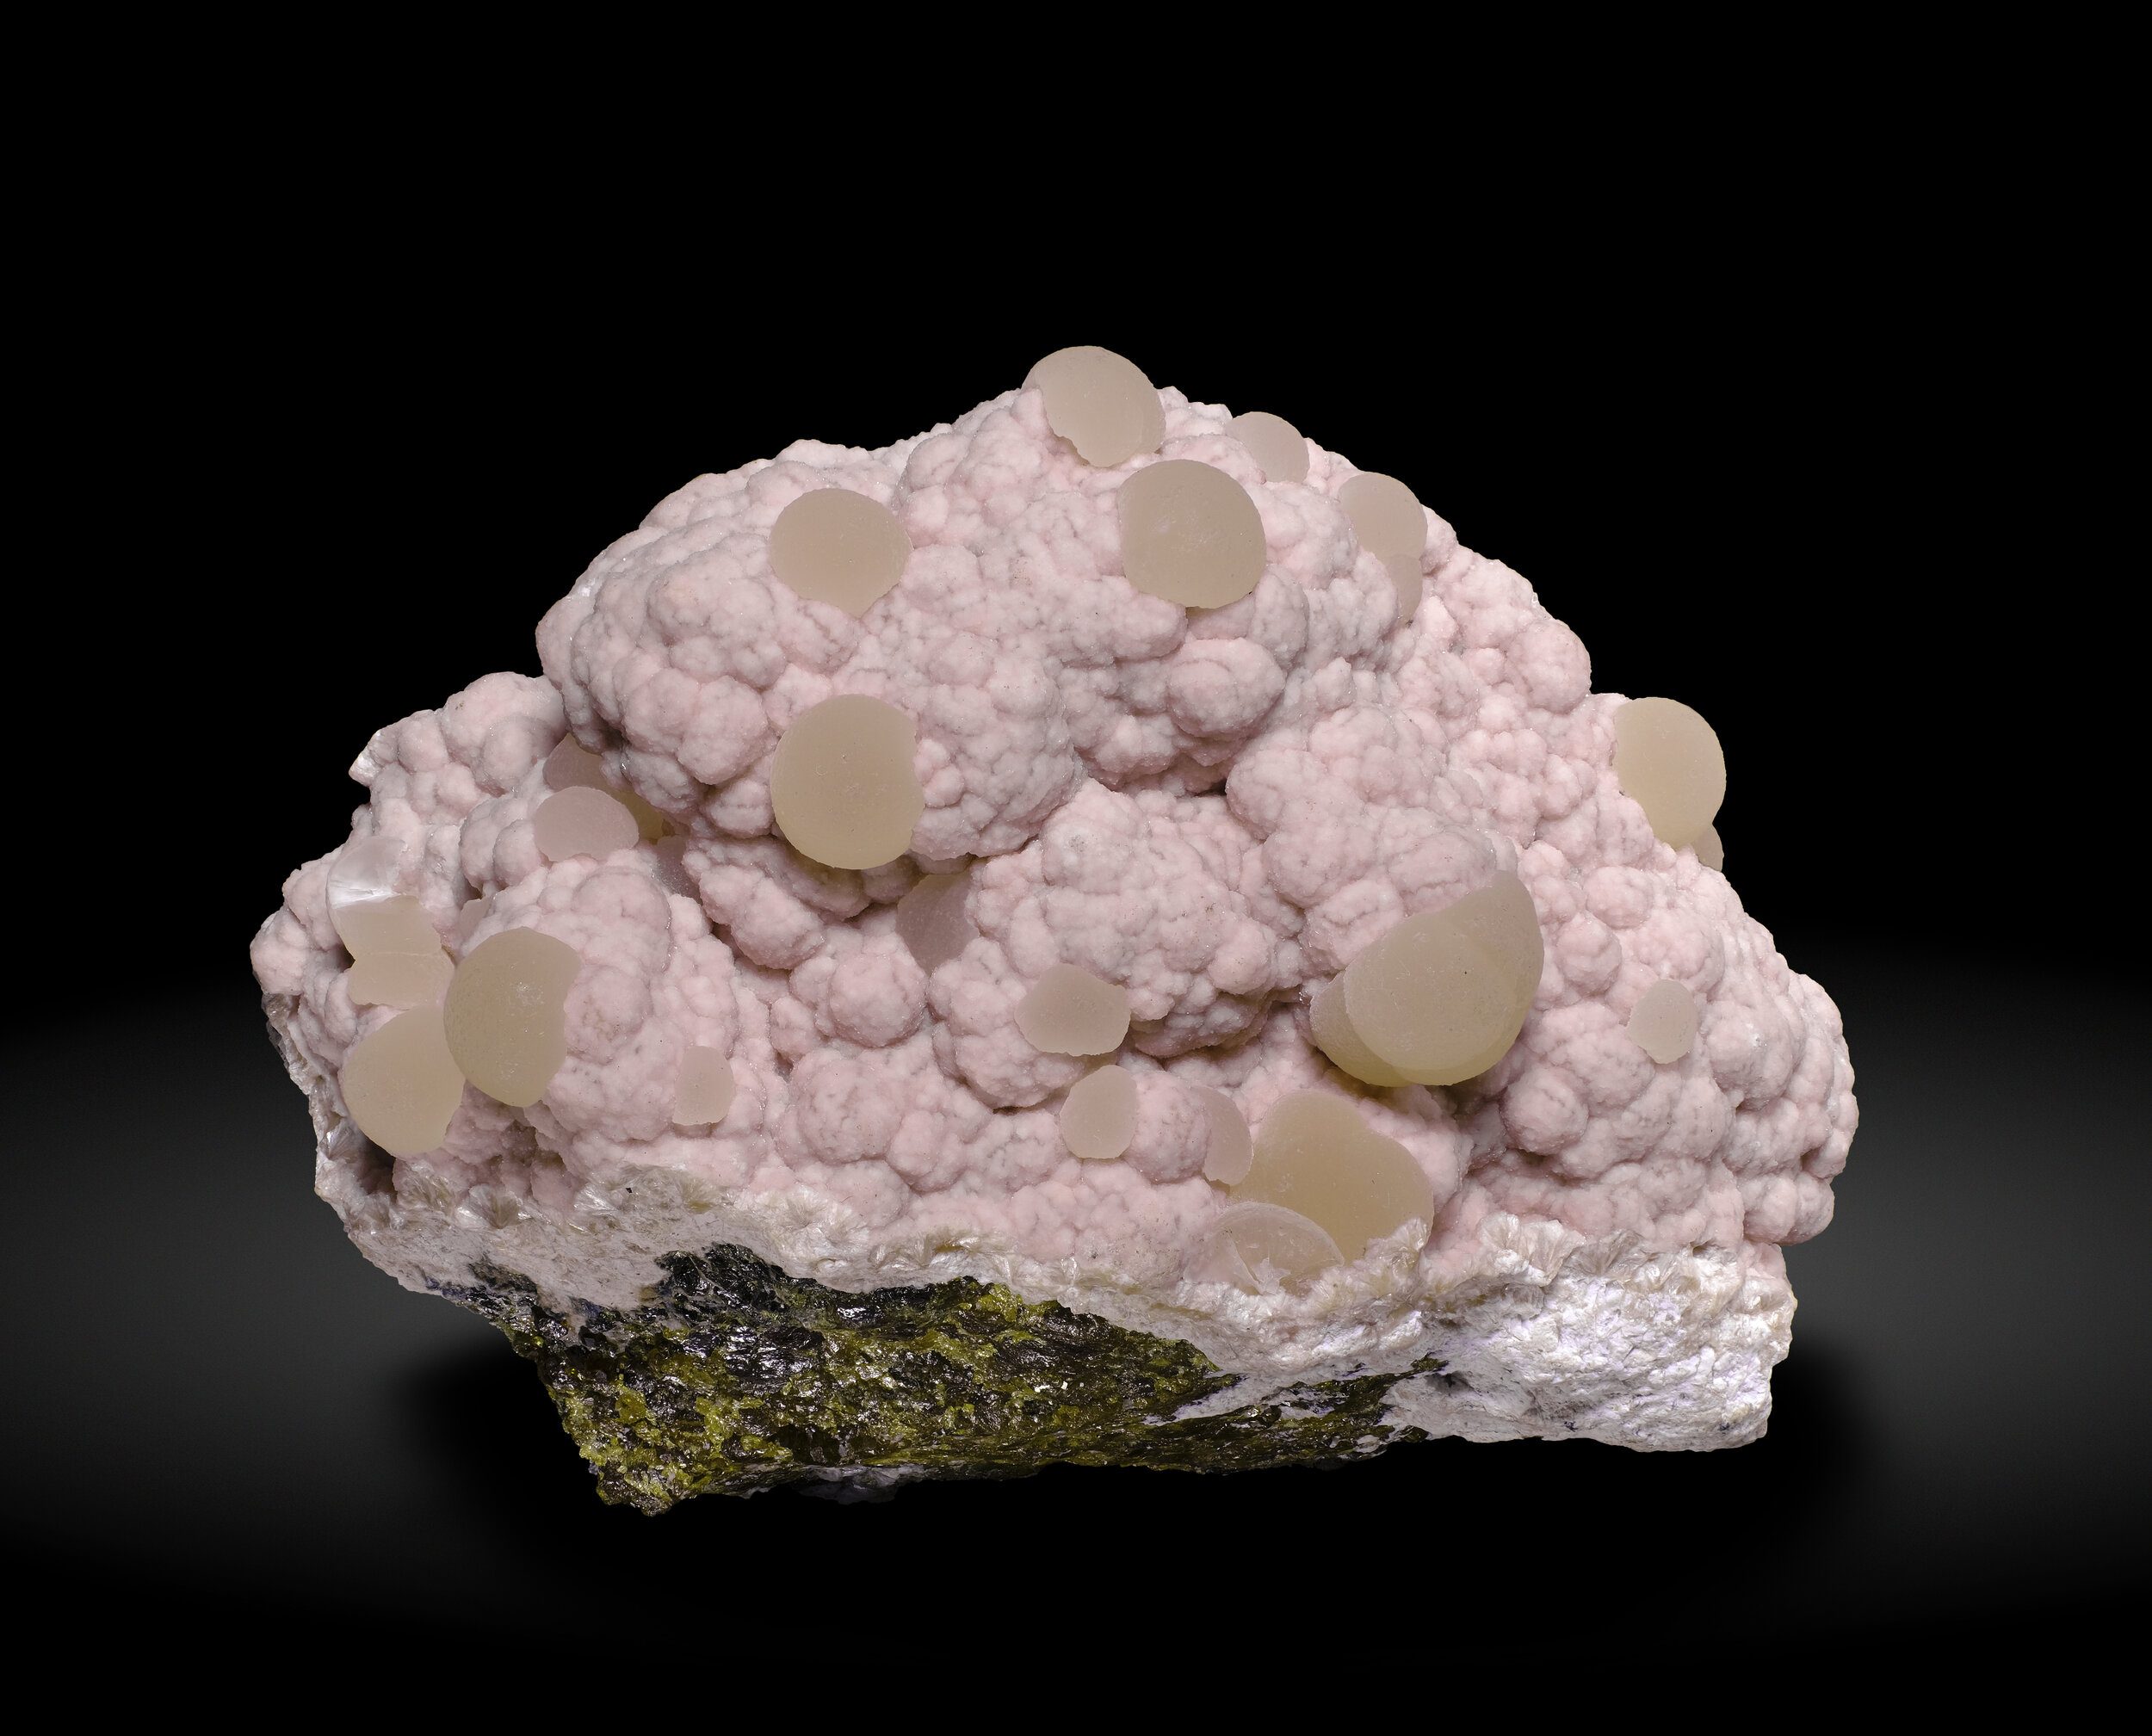 specimens/s_imagesAO2/Bultfonteinite-MRF50AO2_5874_f.jpg